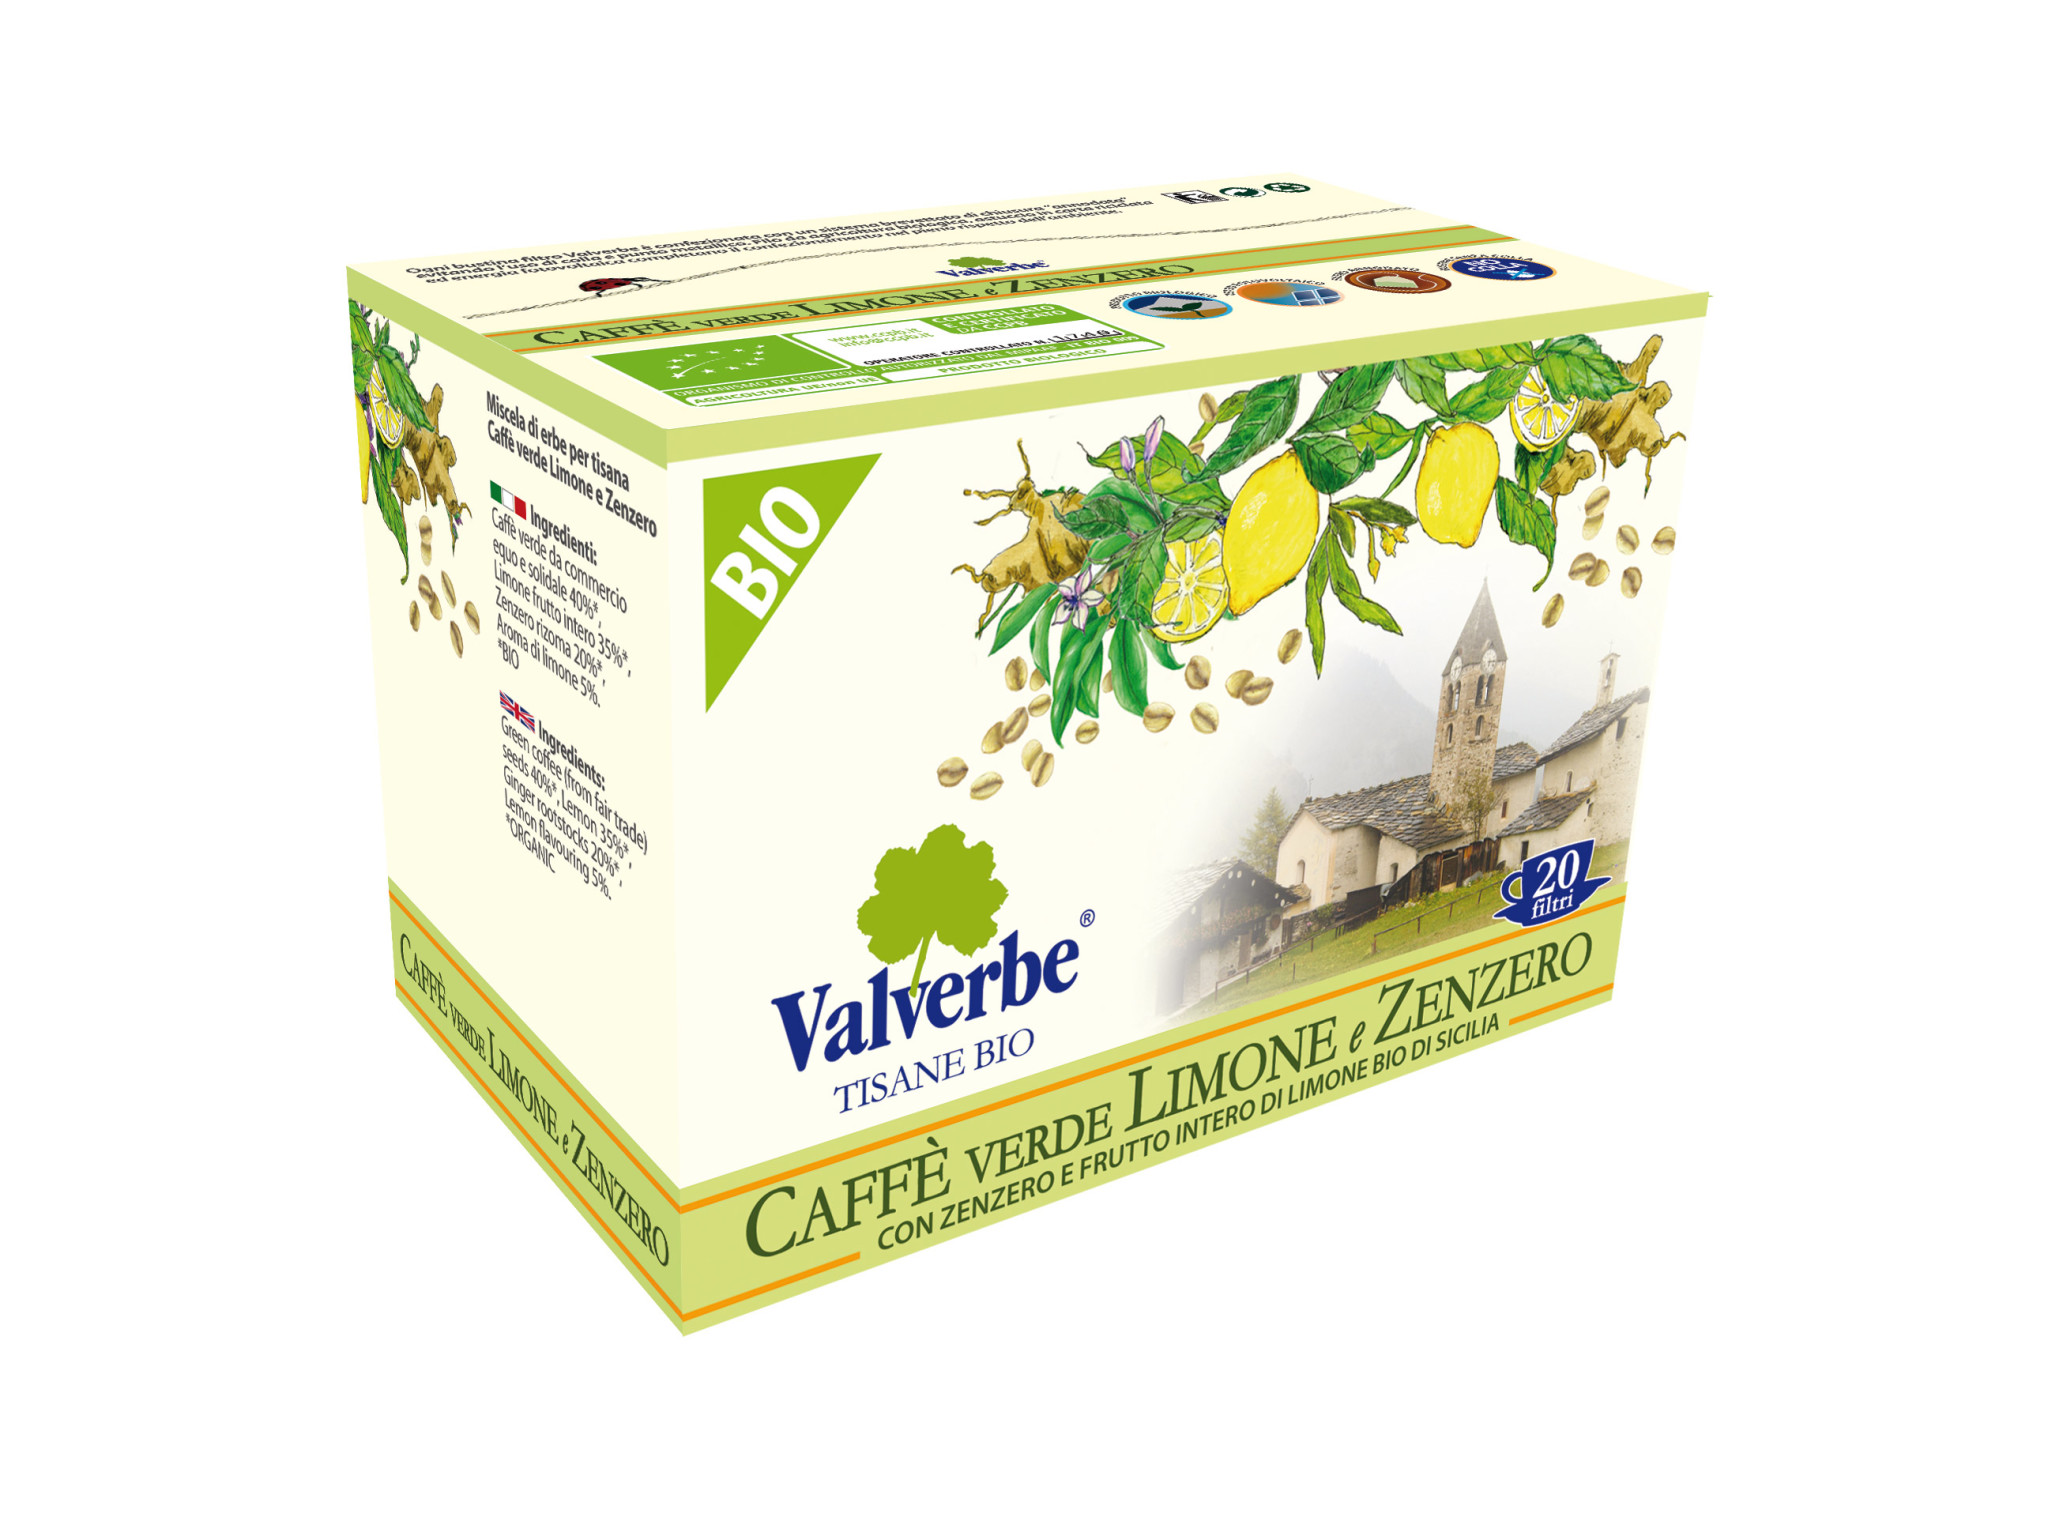 Tè Verde deteinato - Valverbe